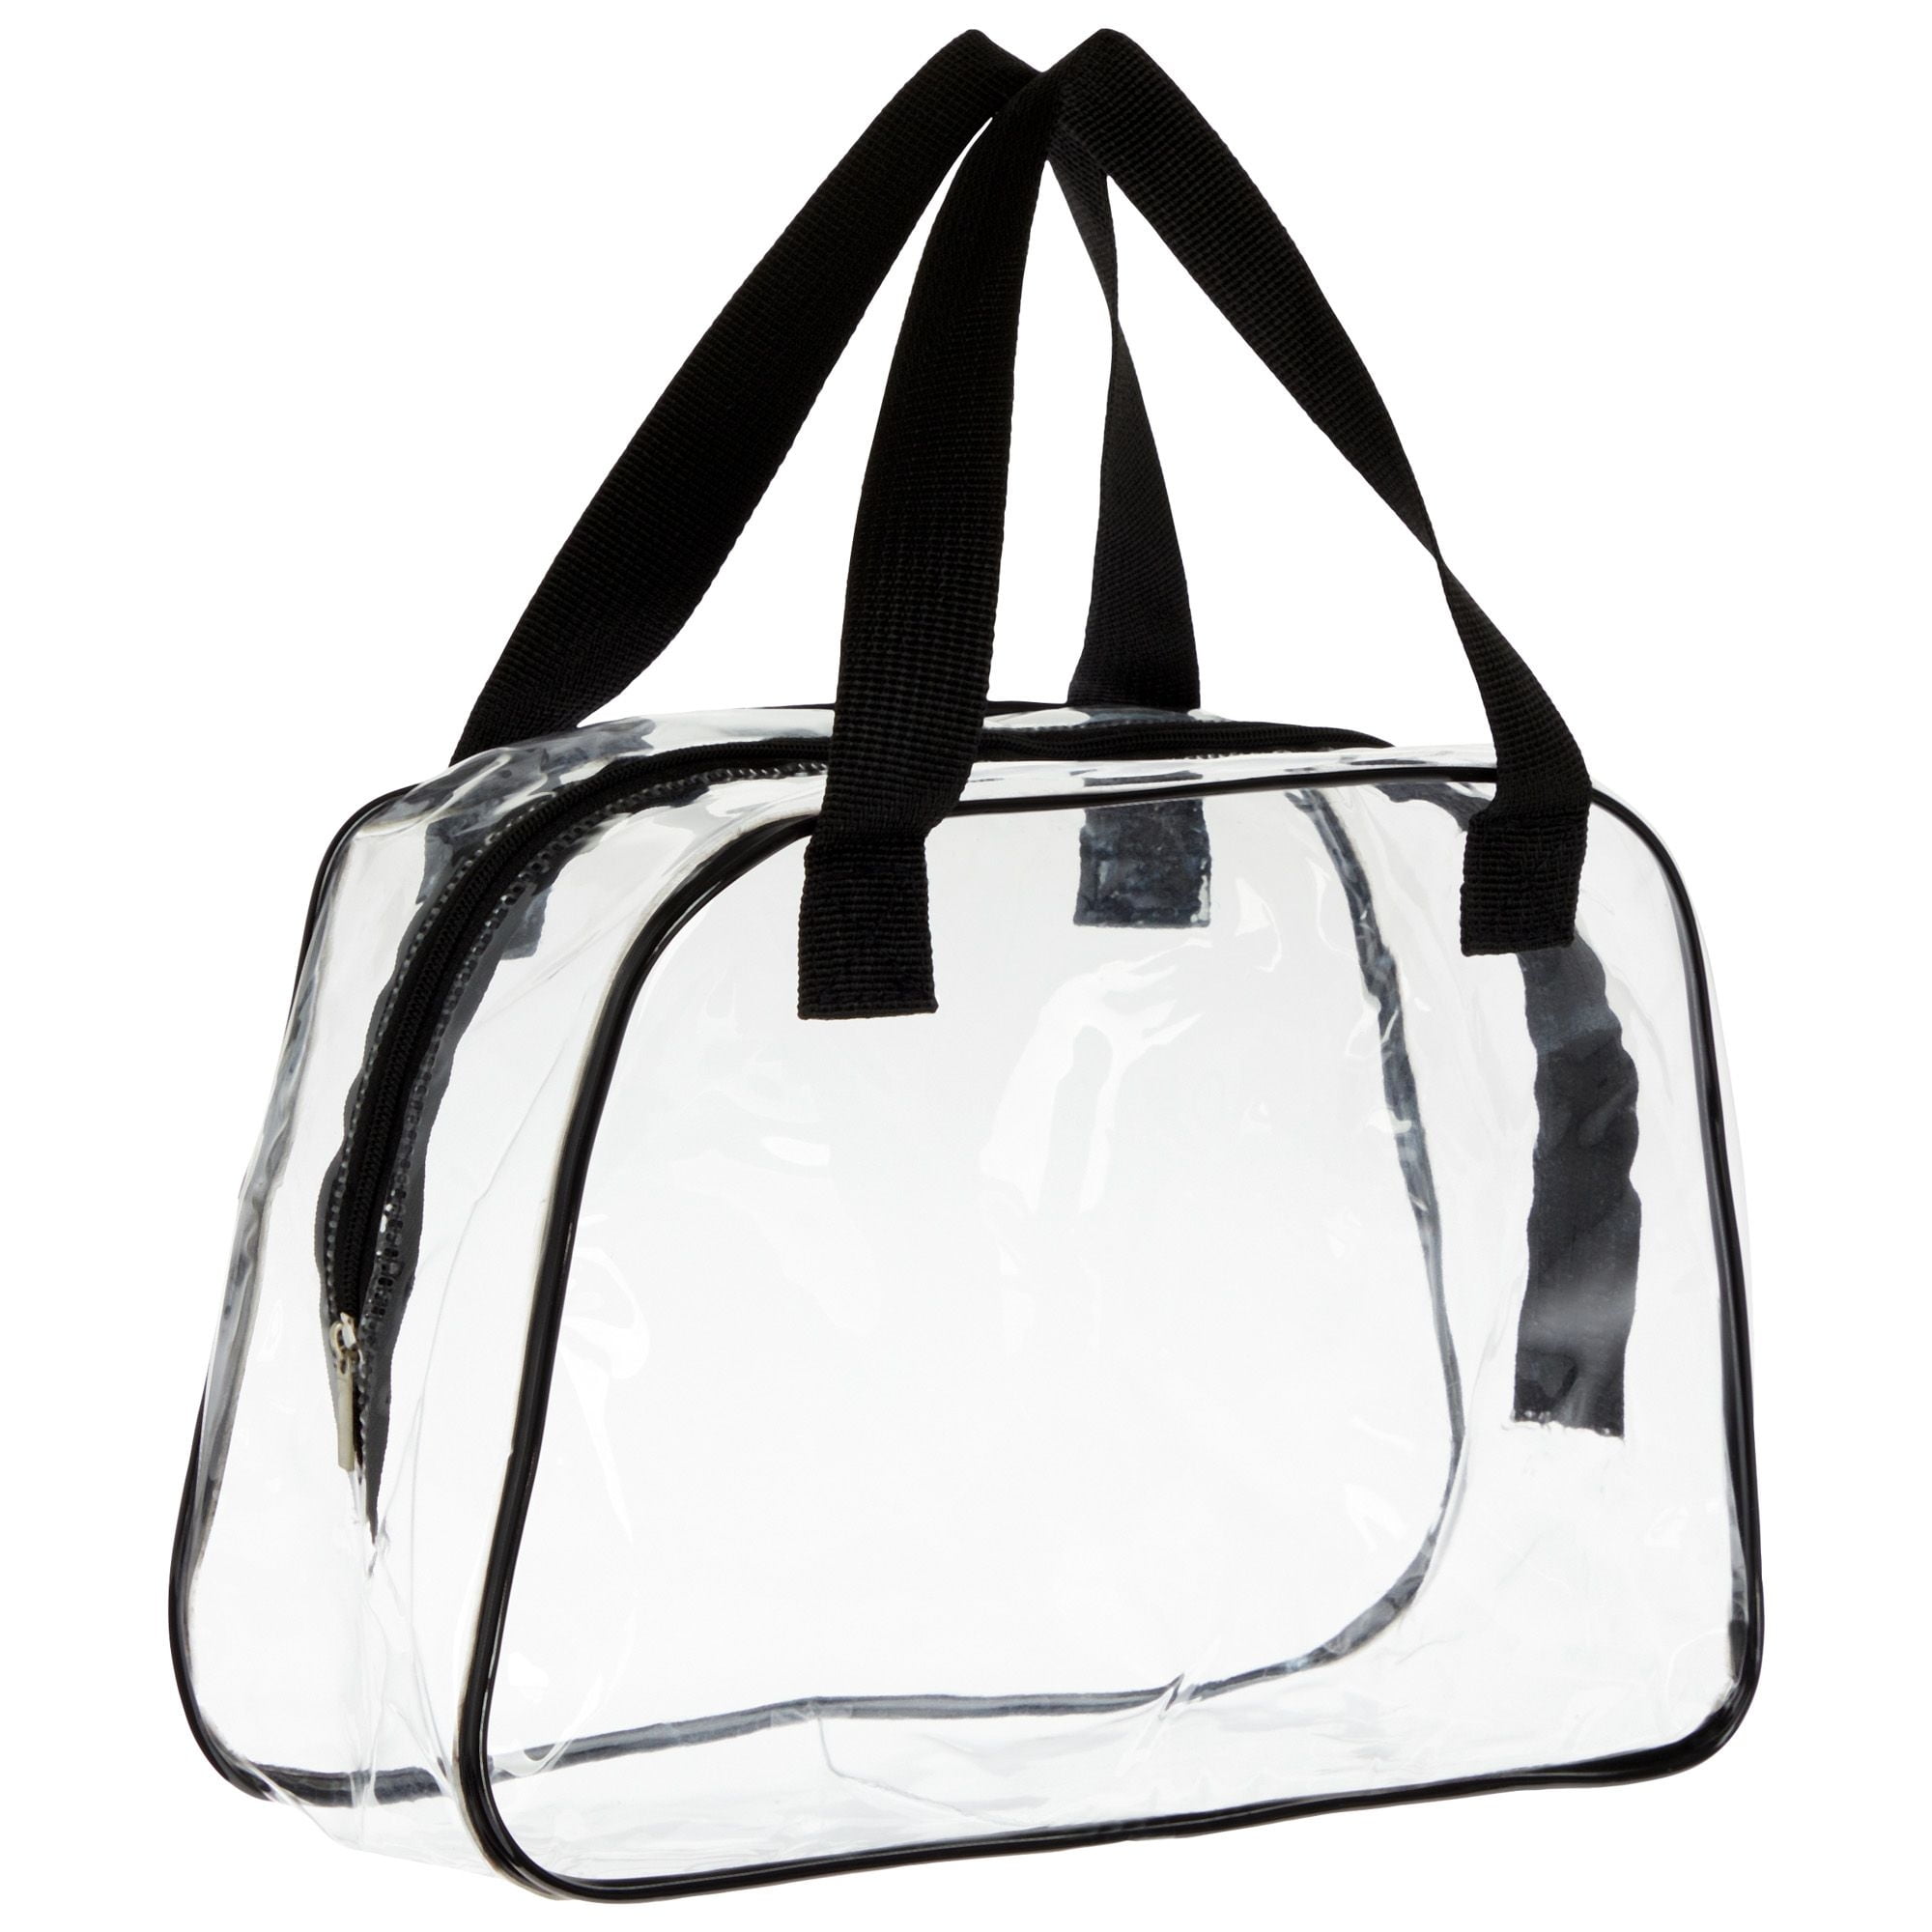 Buy Clear plastic bags with handles + Best Price - Arad Branding